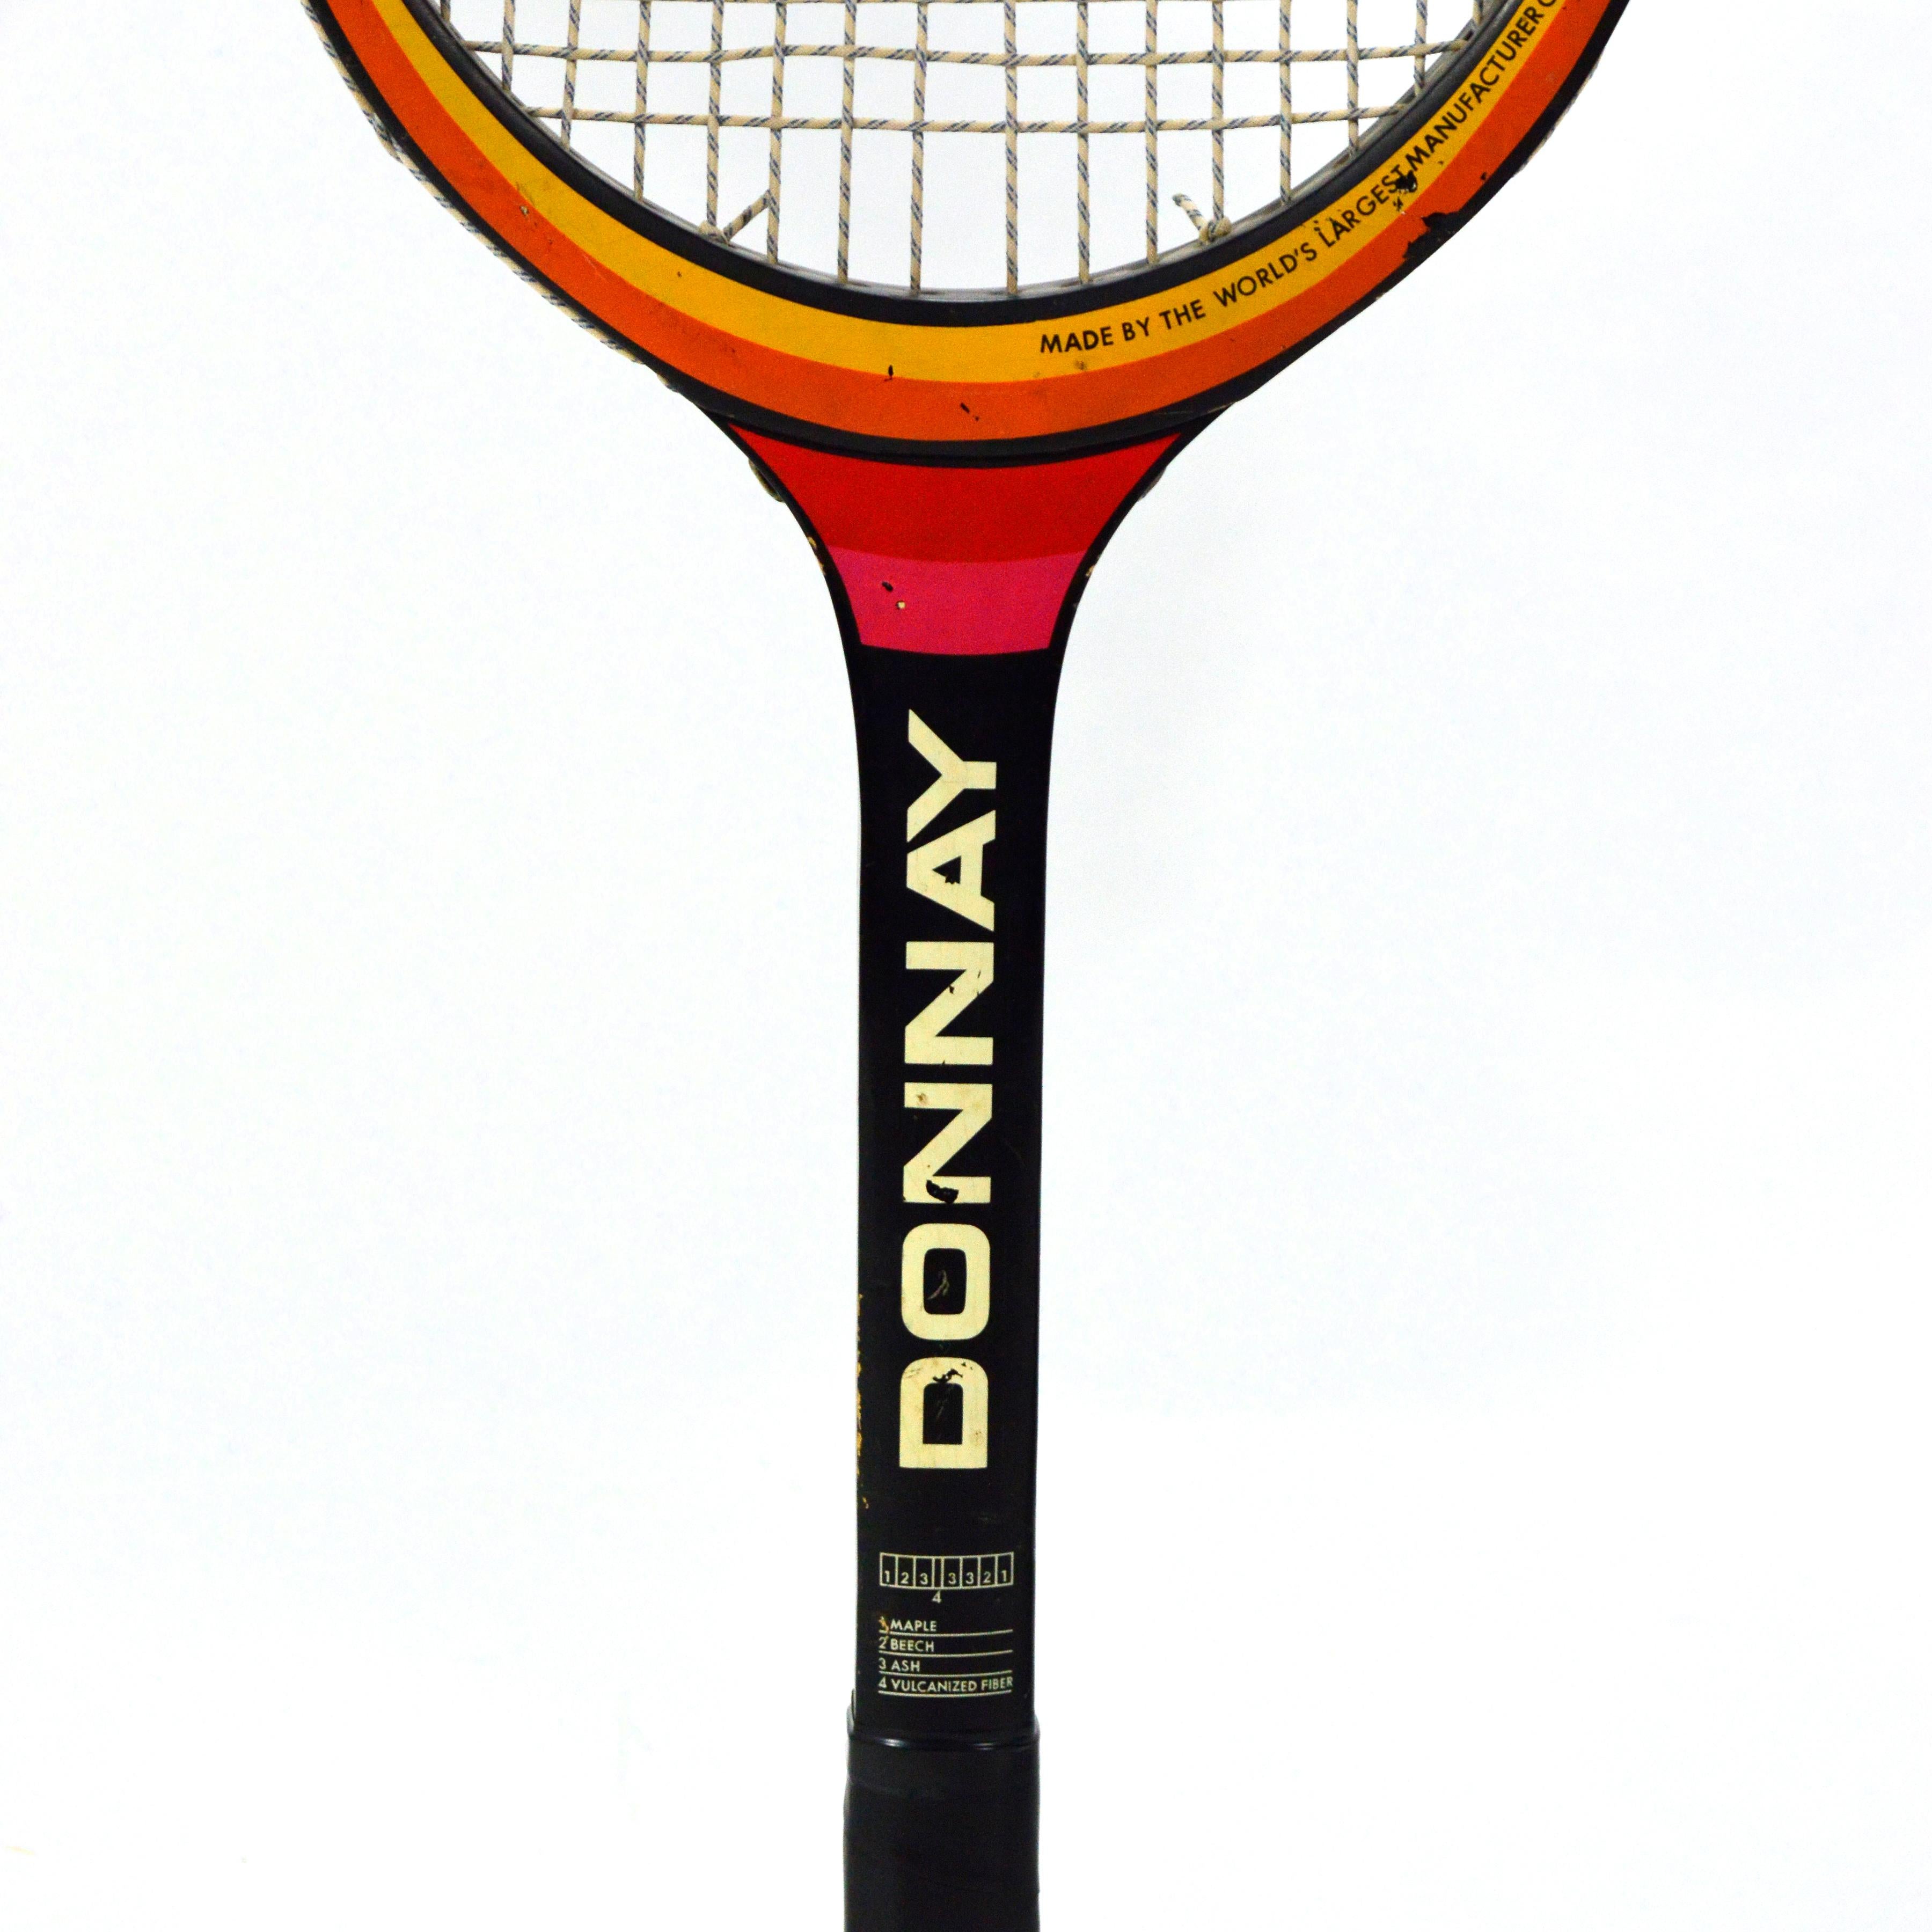 donnay wooden tennis racket